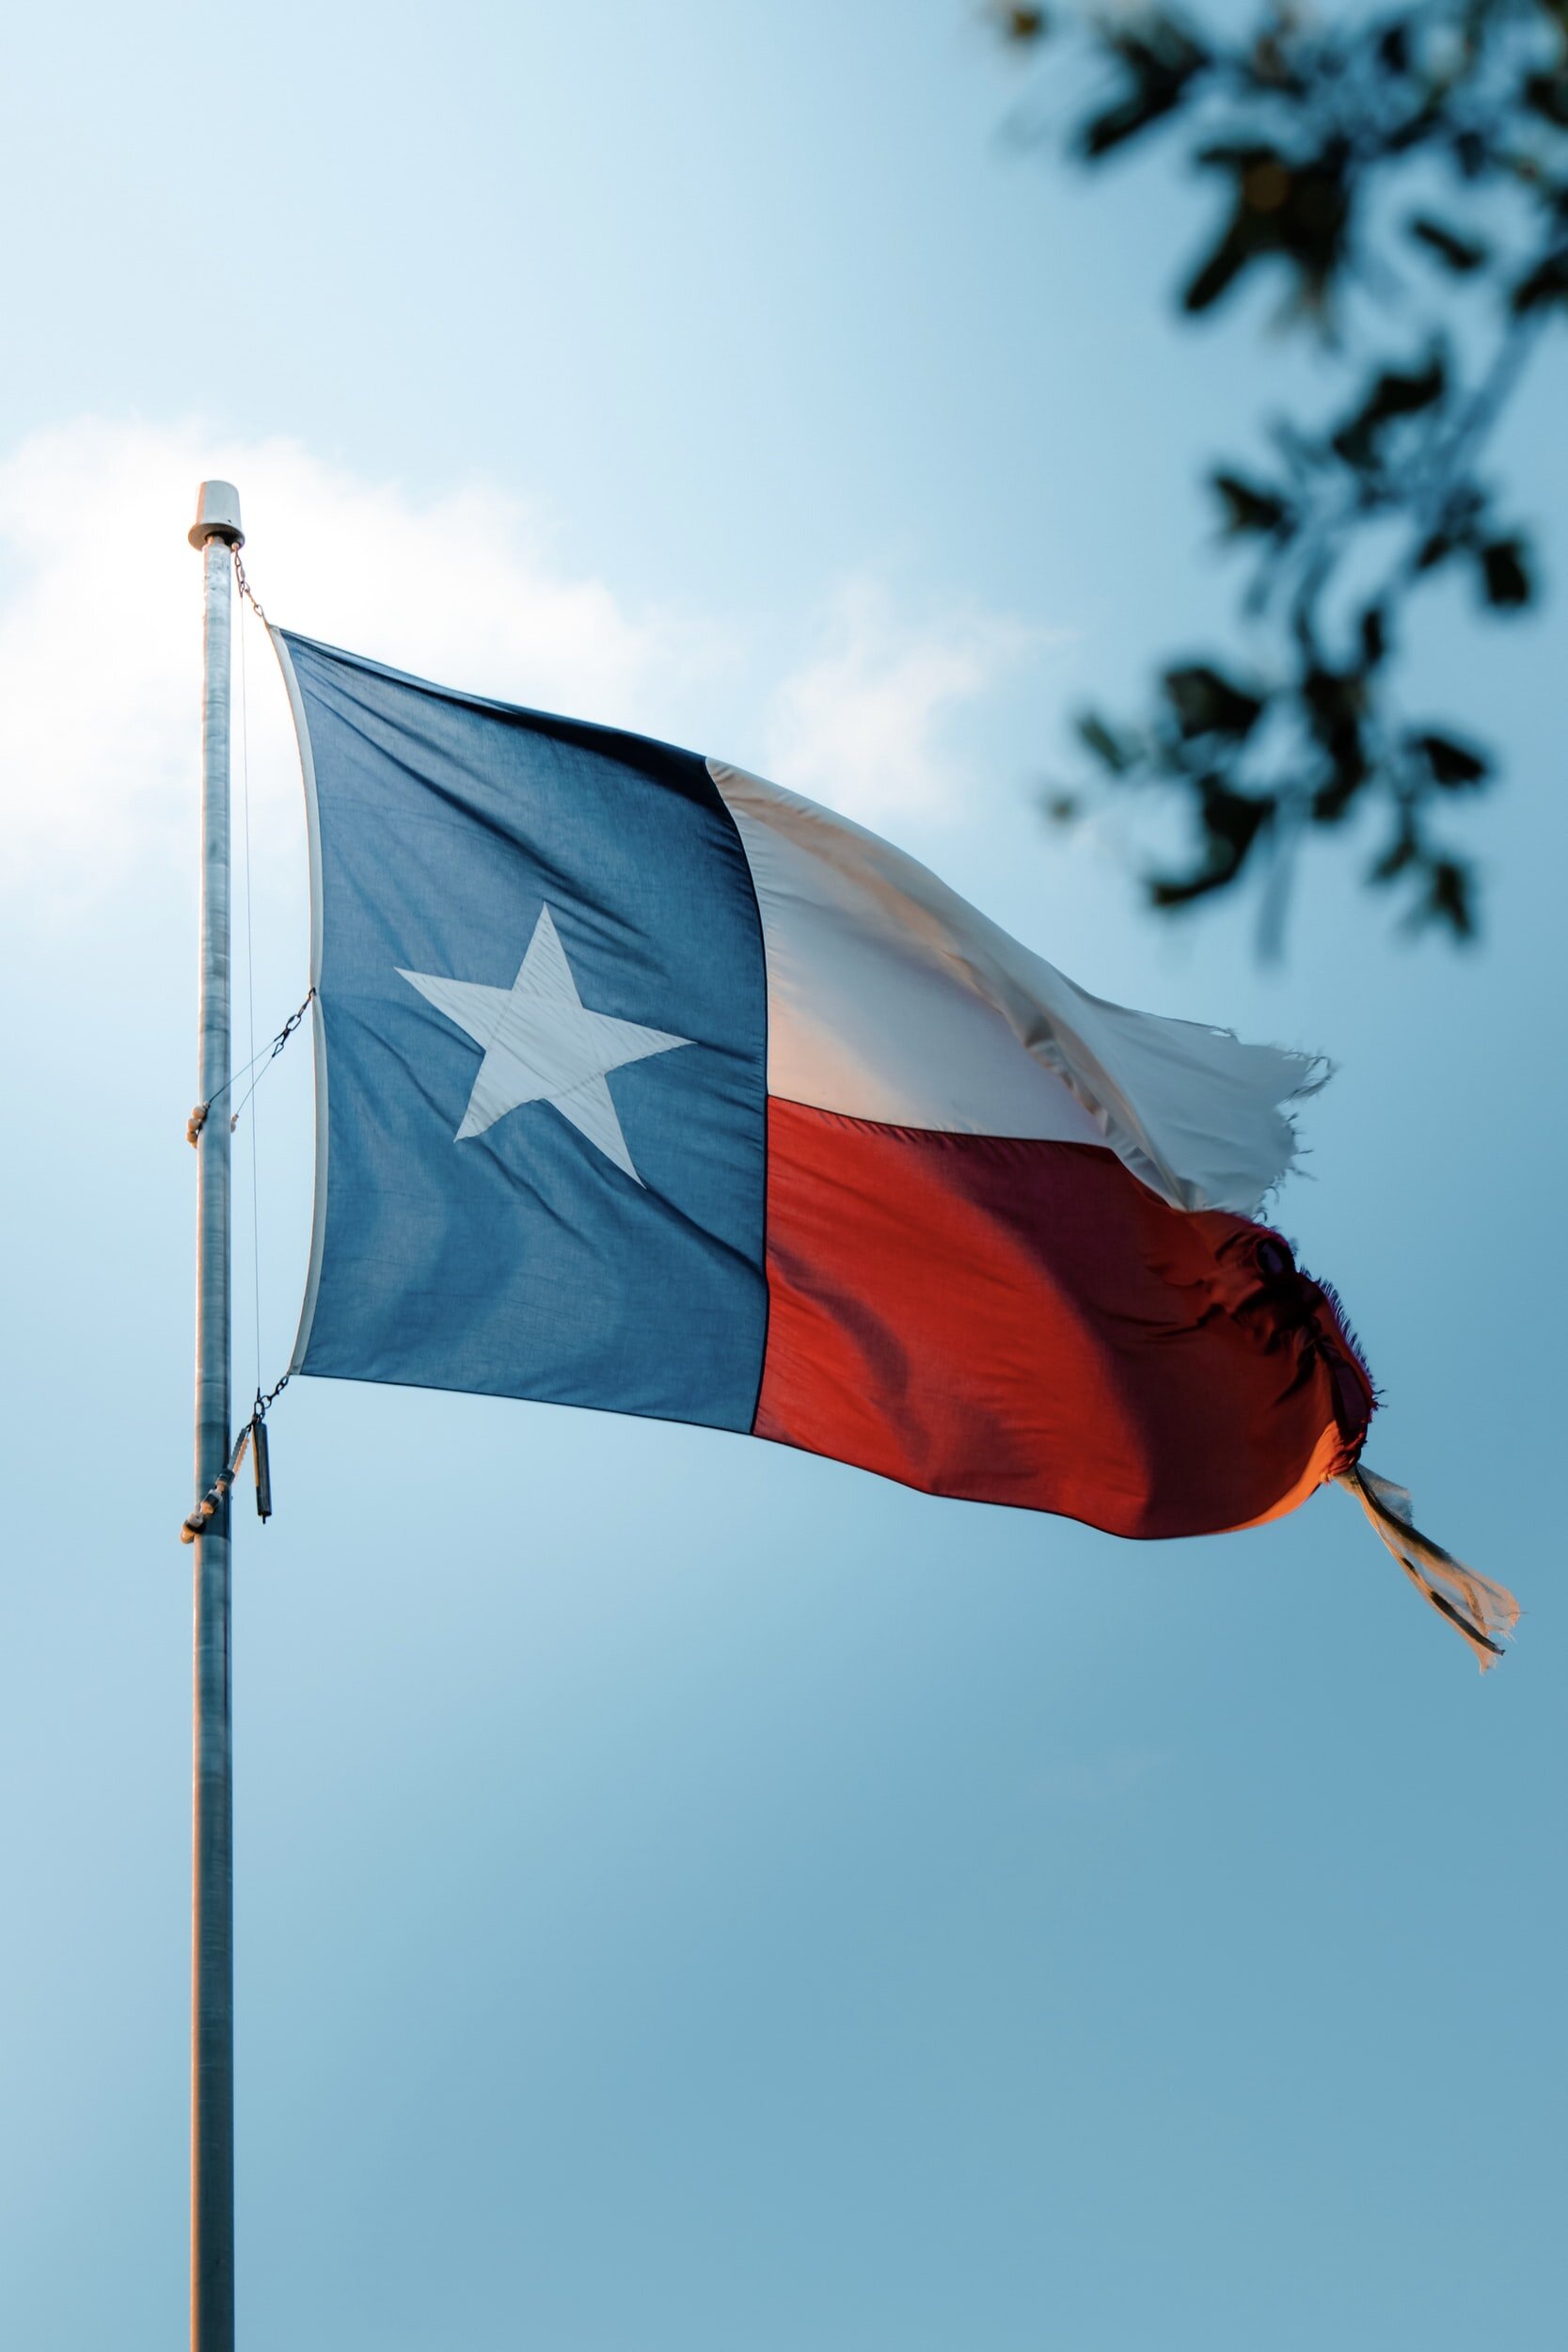 Evolving a Cybersecurity Plan Under Texas Senate Bill 820